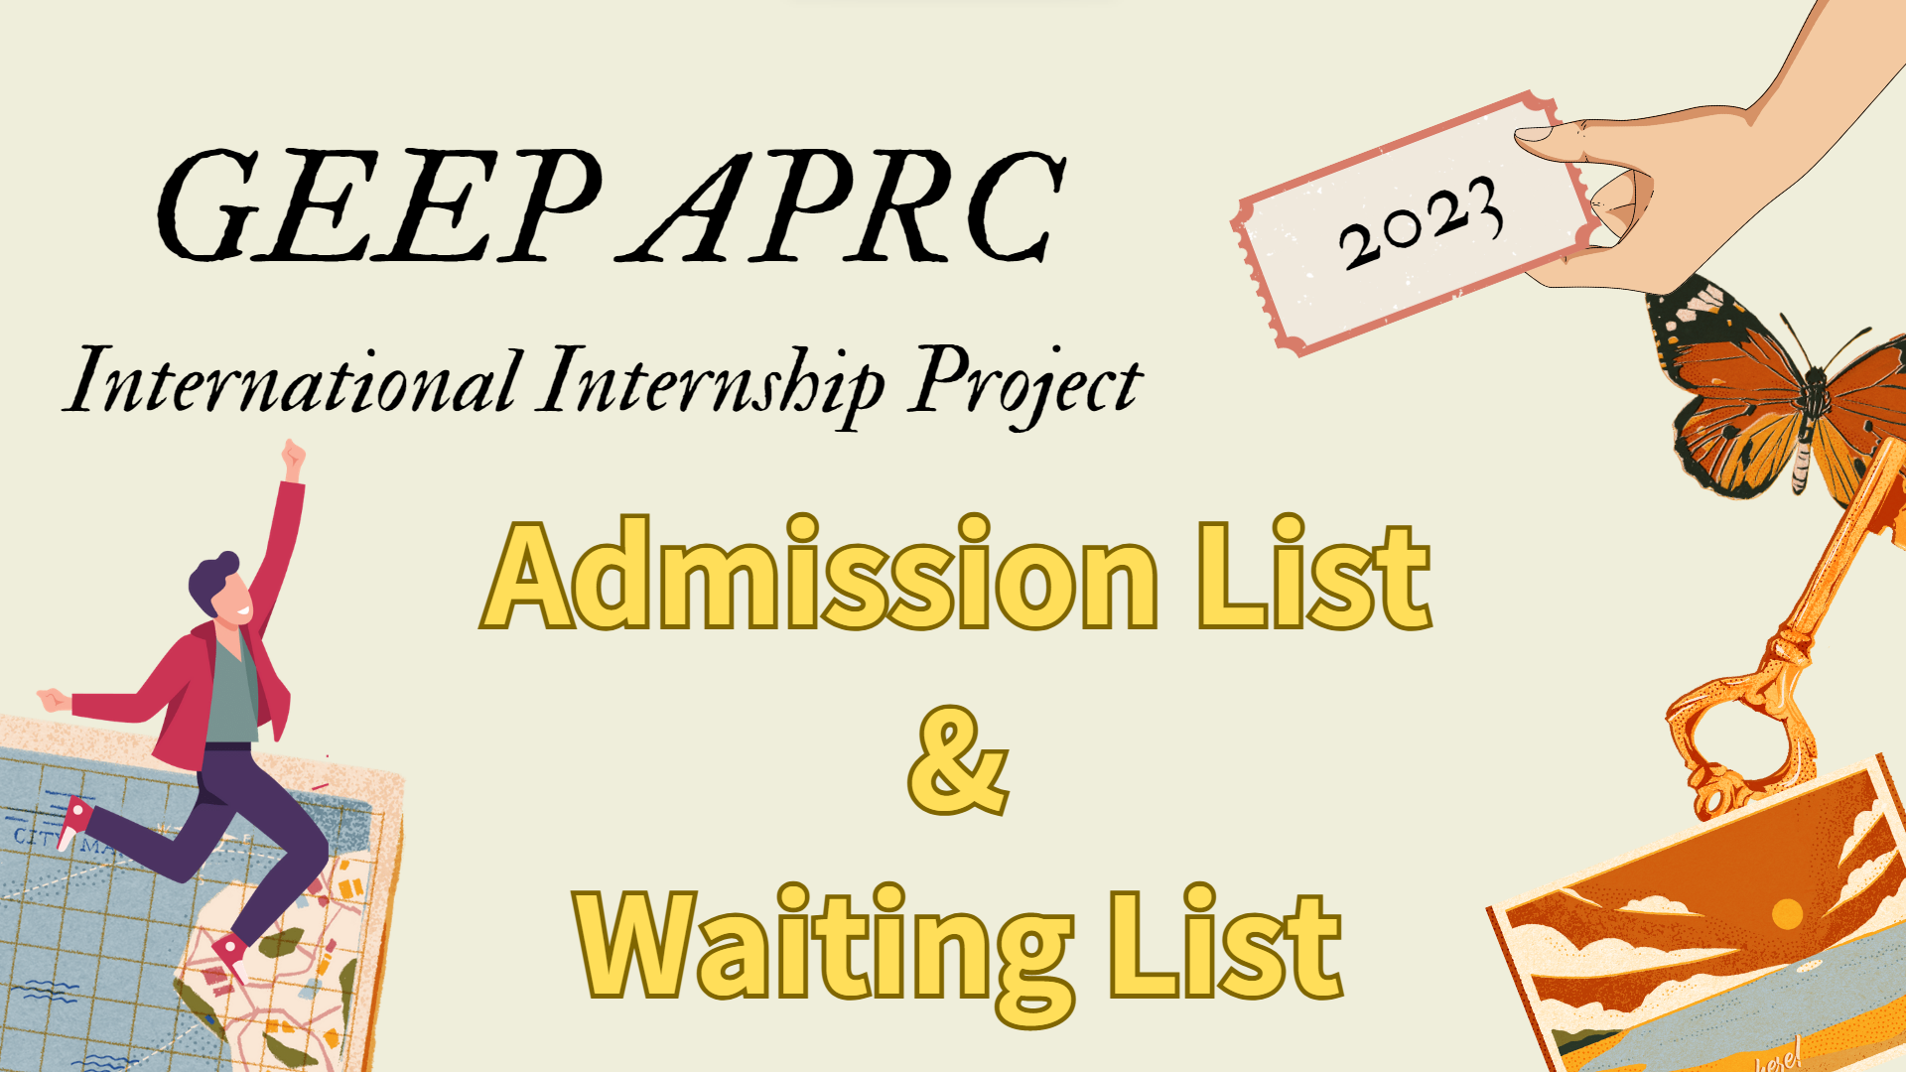 APRC 2023 International Internship Project - Admission and Waiting List